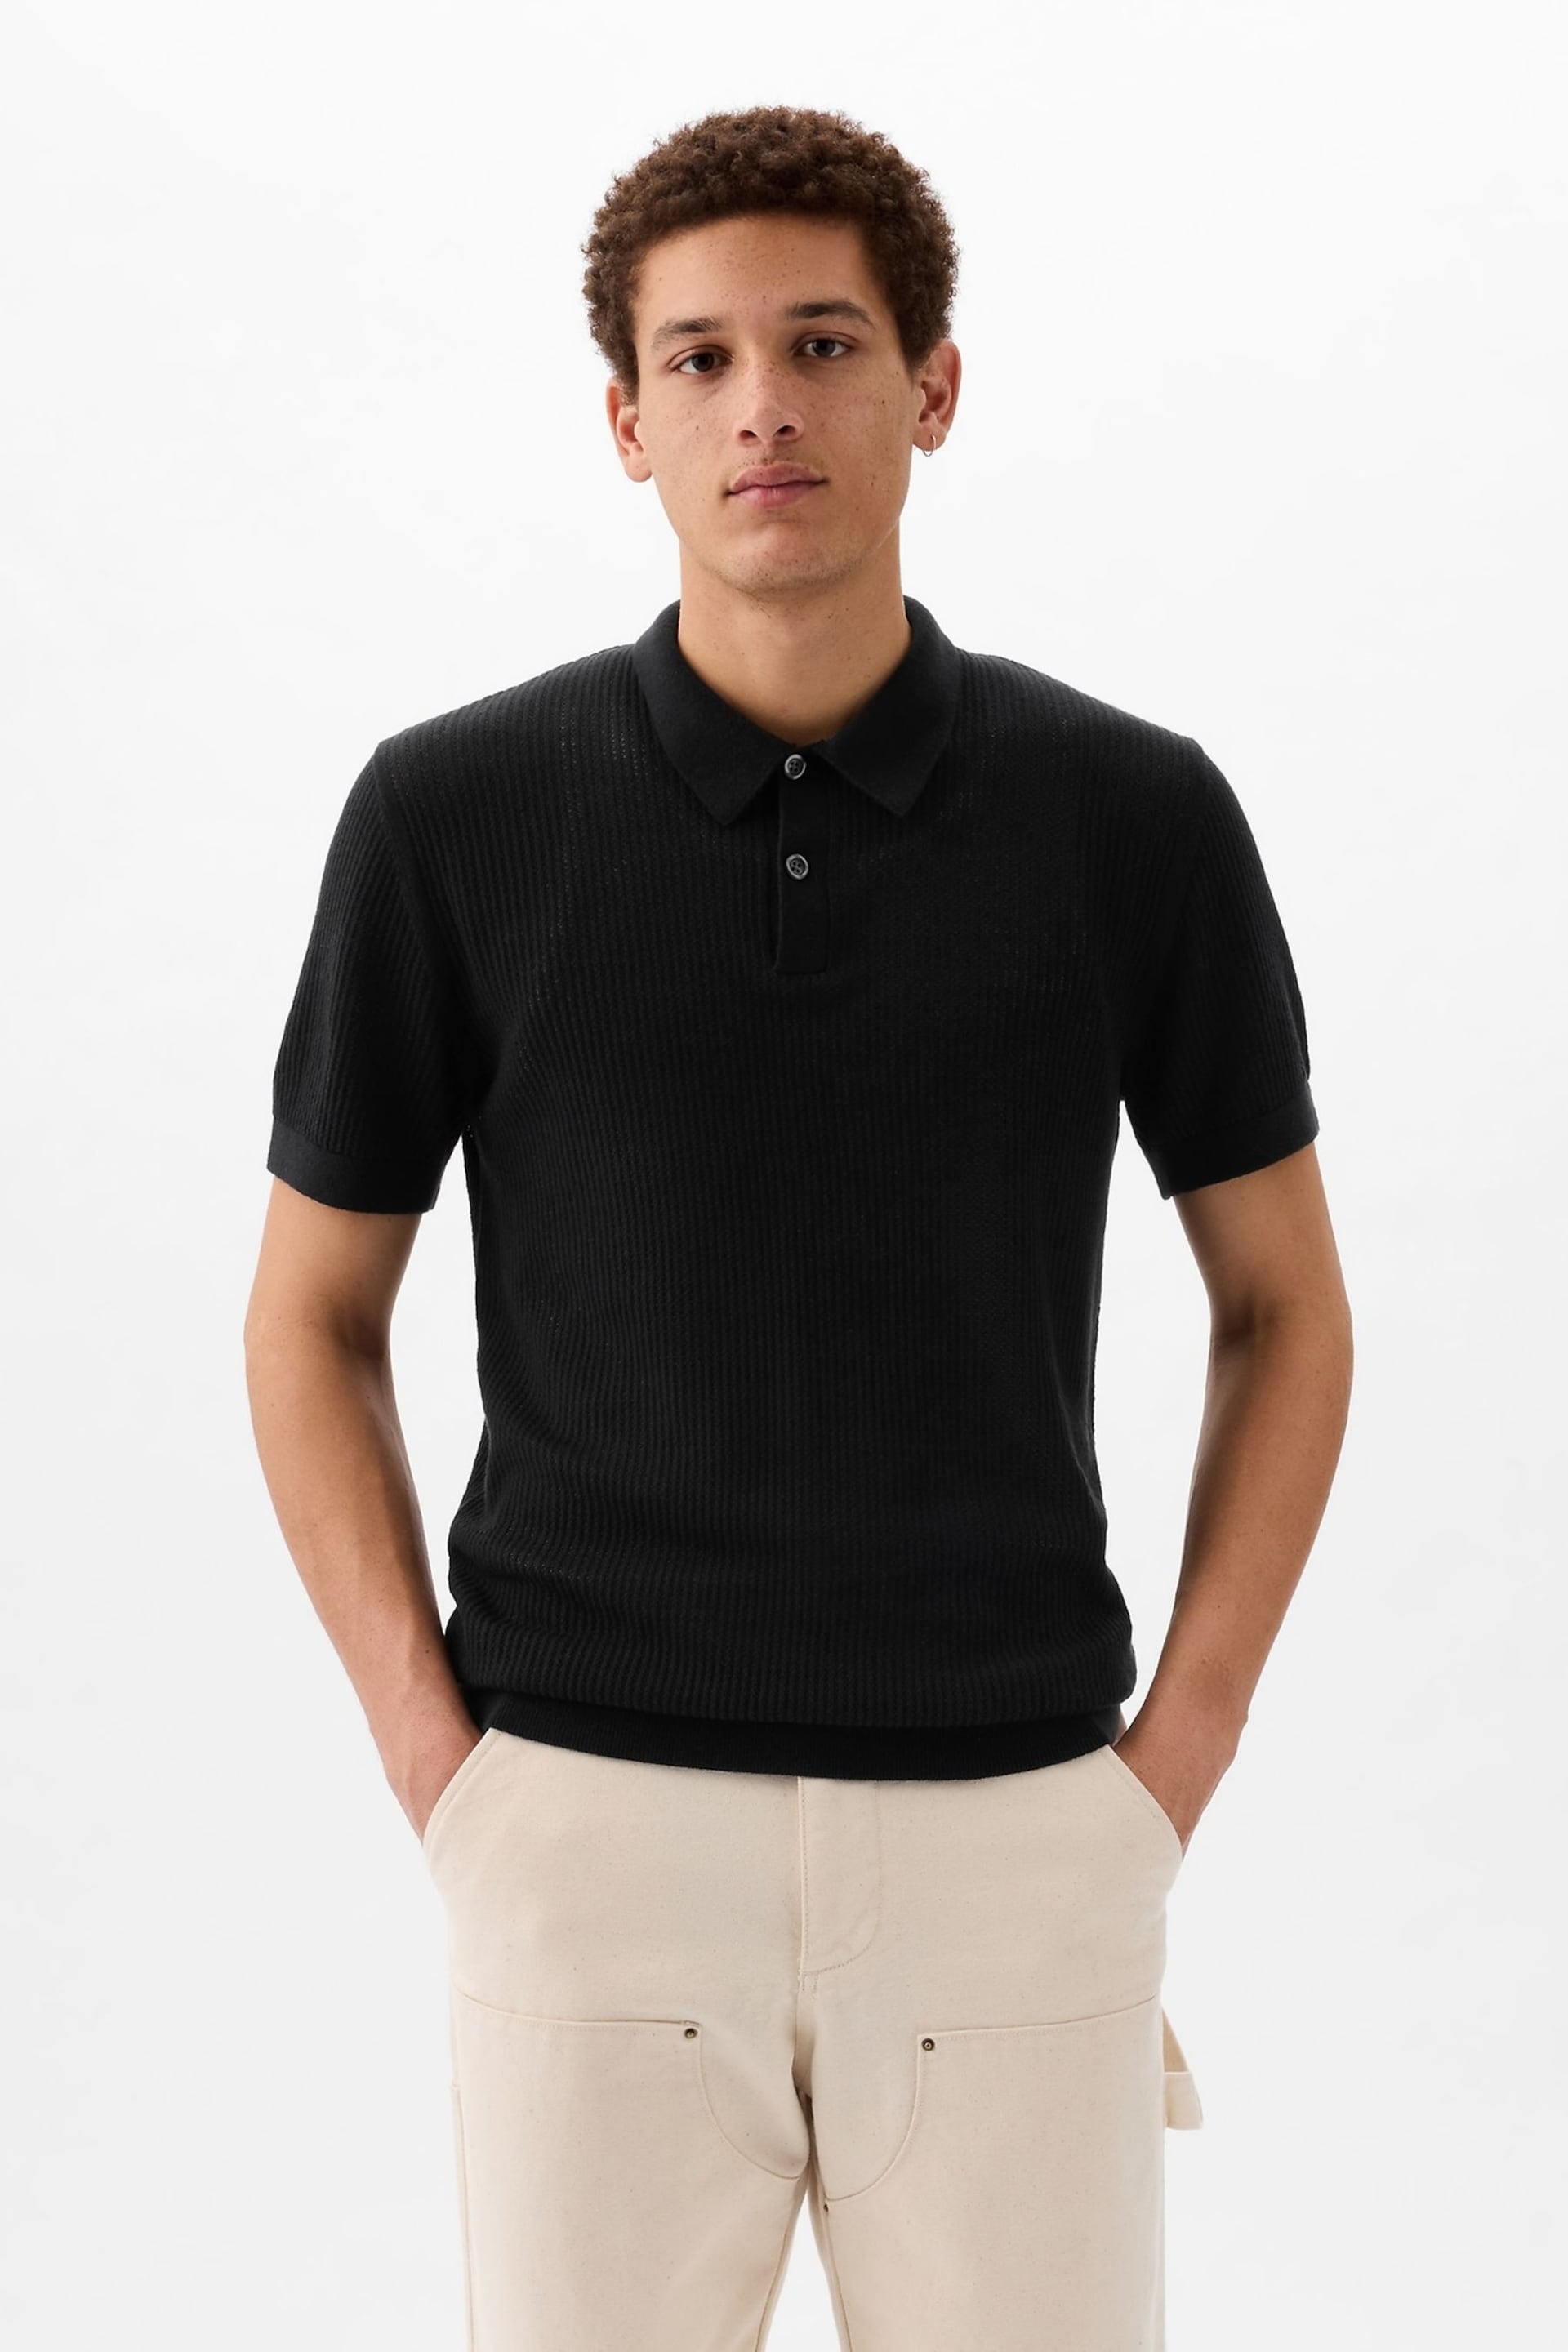 Gap Black Textured Short Sleeve Polo Shirt - Image 1 of 4